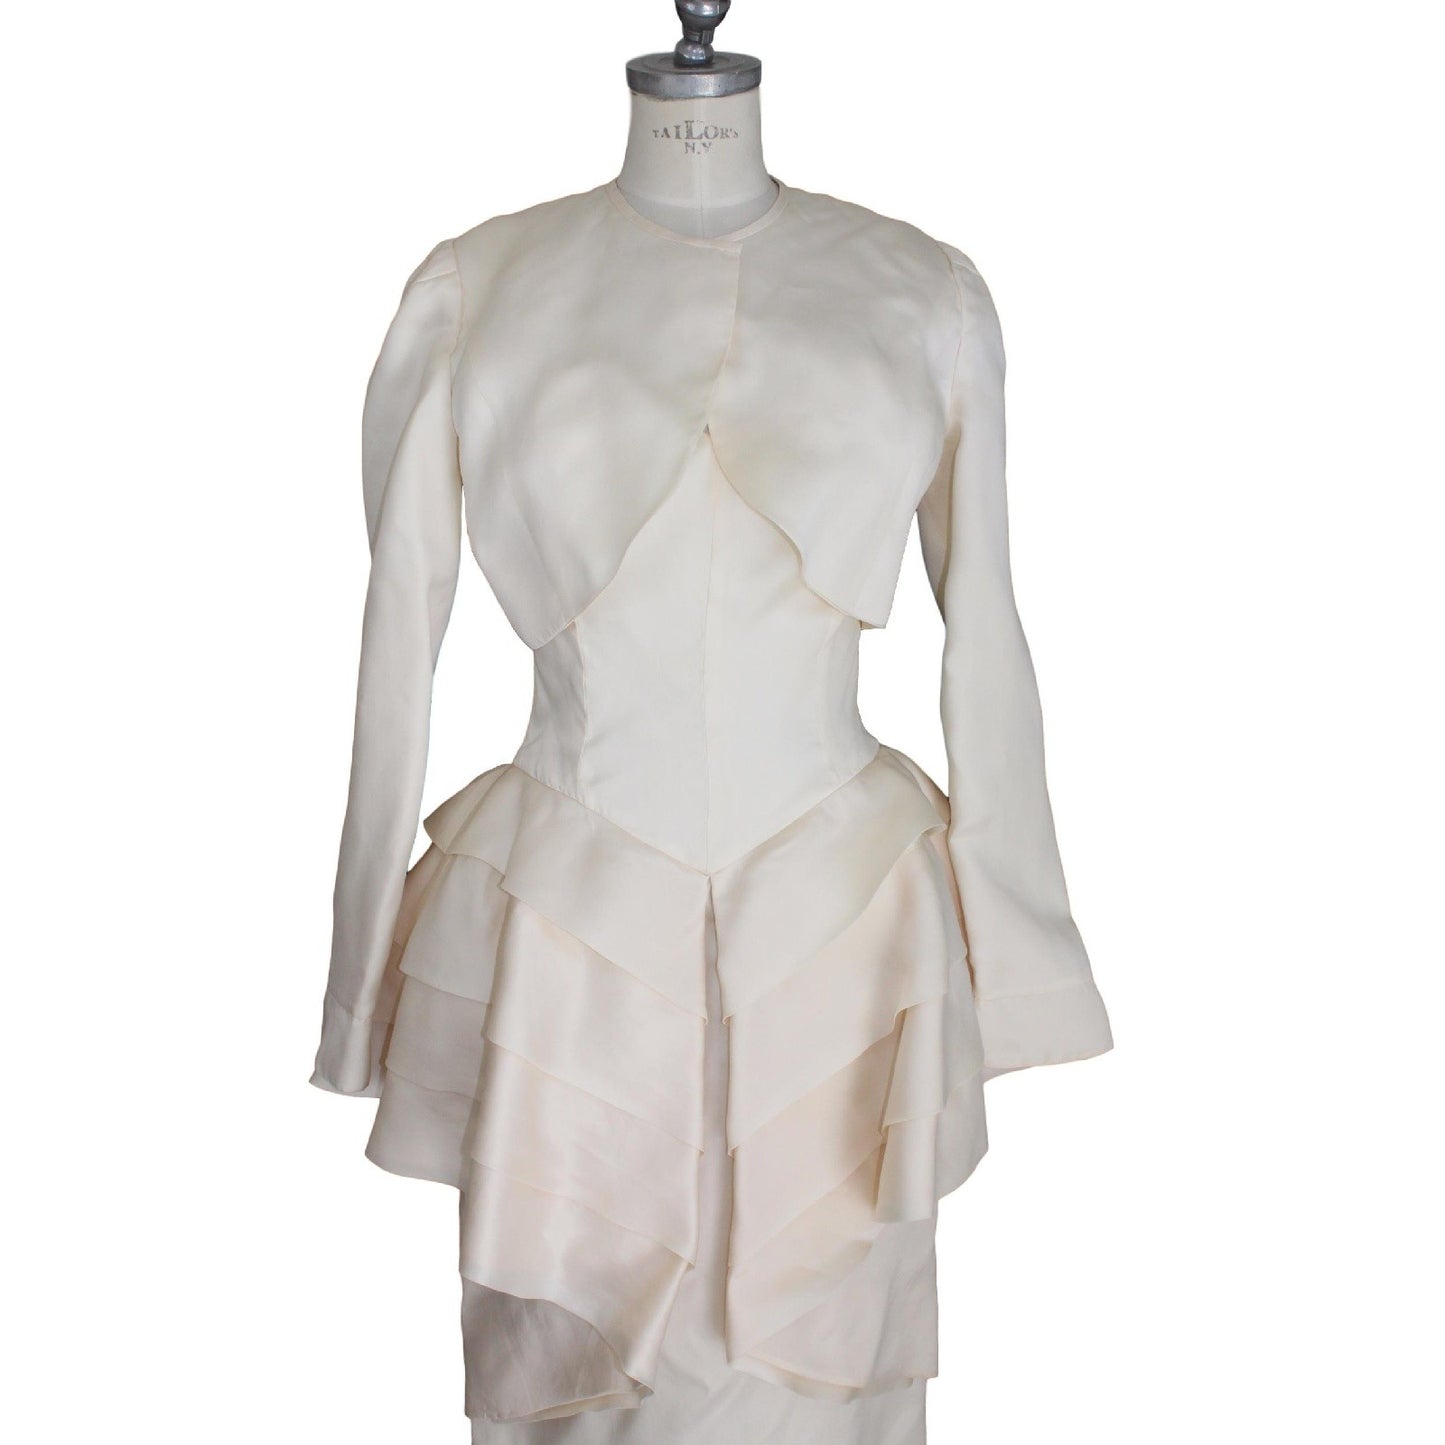 Cailan'd Vintage Beige Silk Wedding Dress